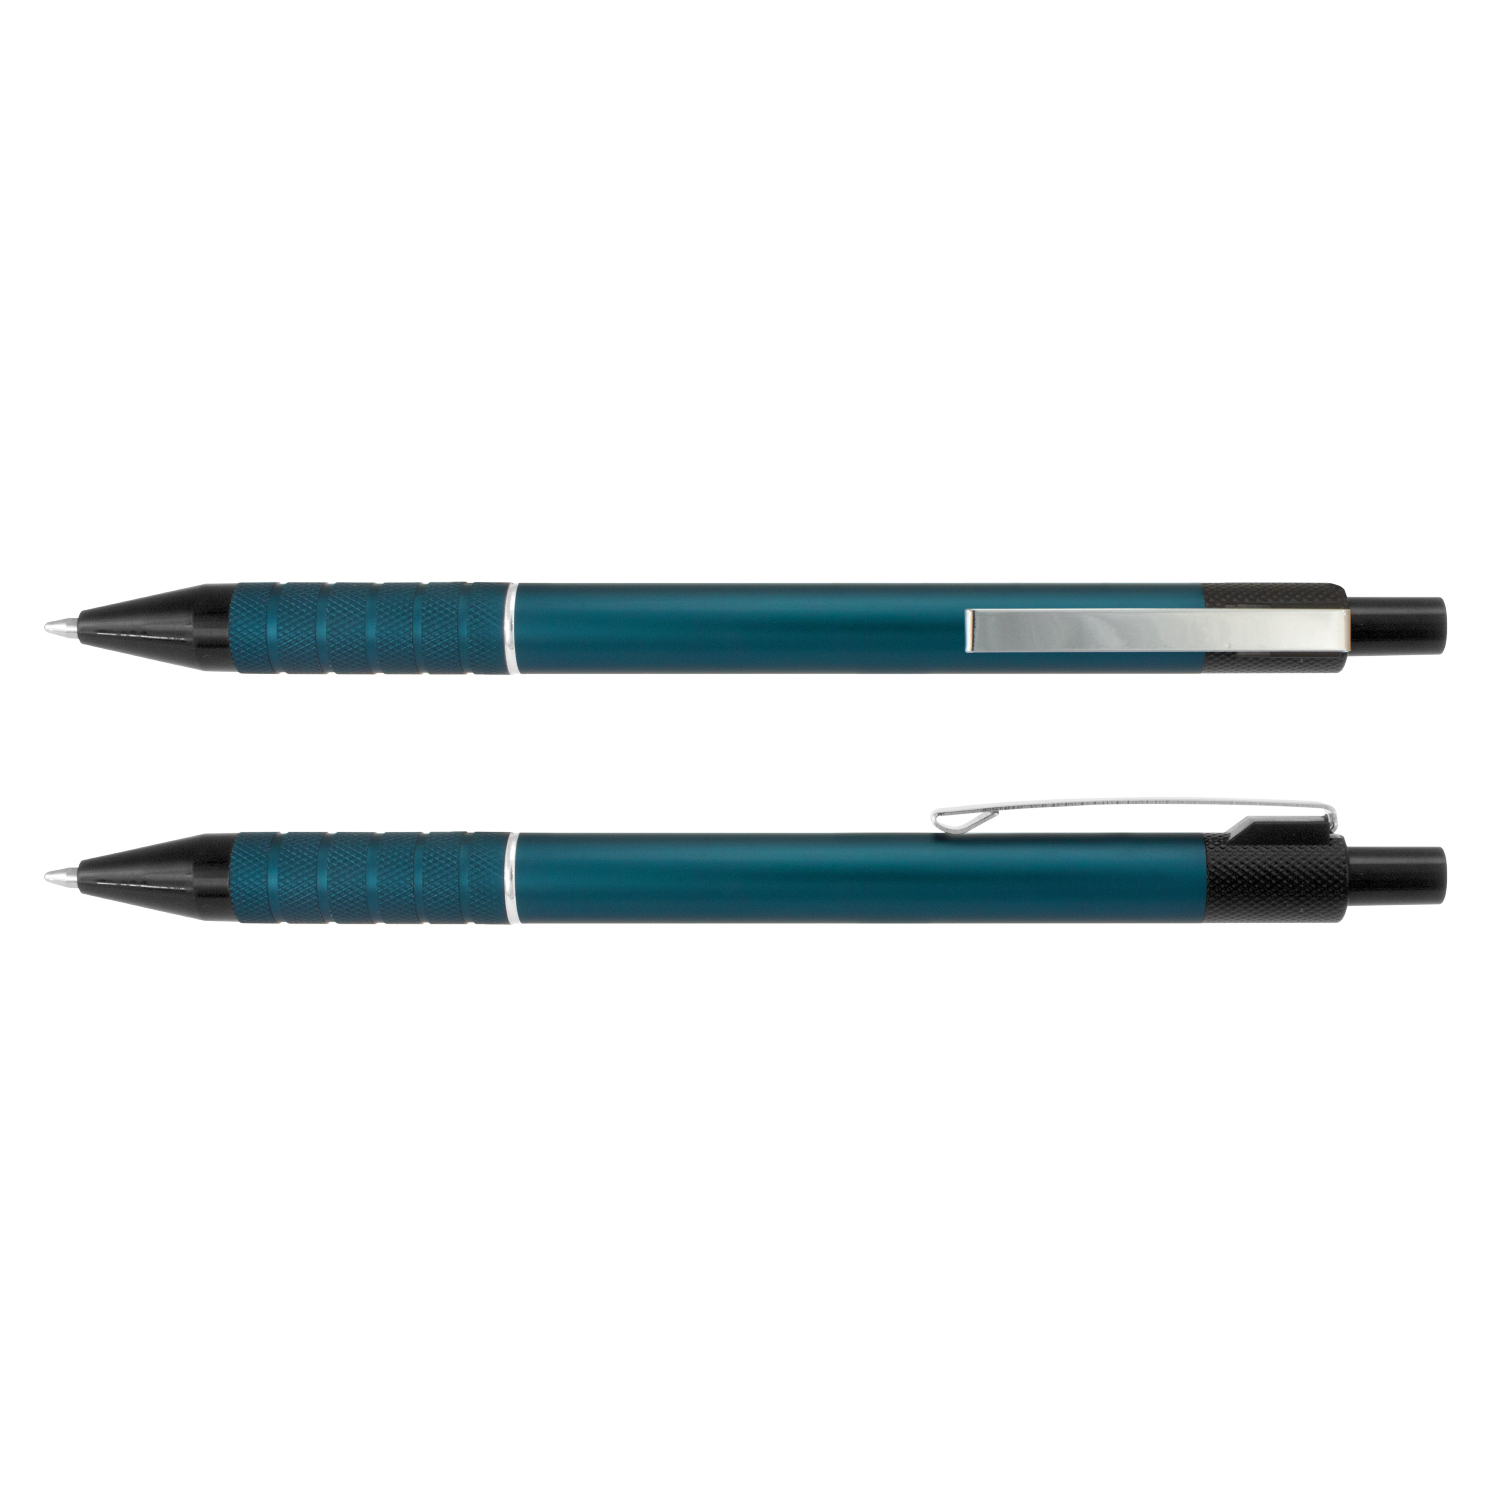 RE84190 - Winchester Pen